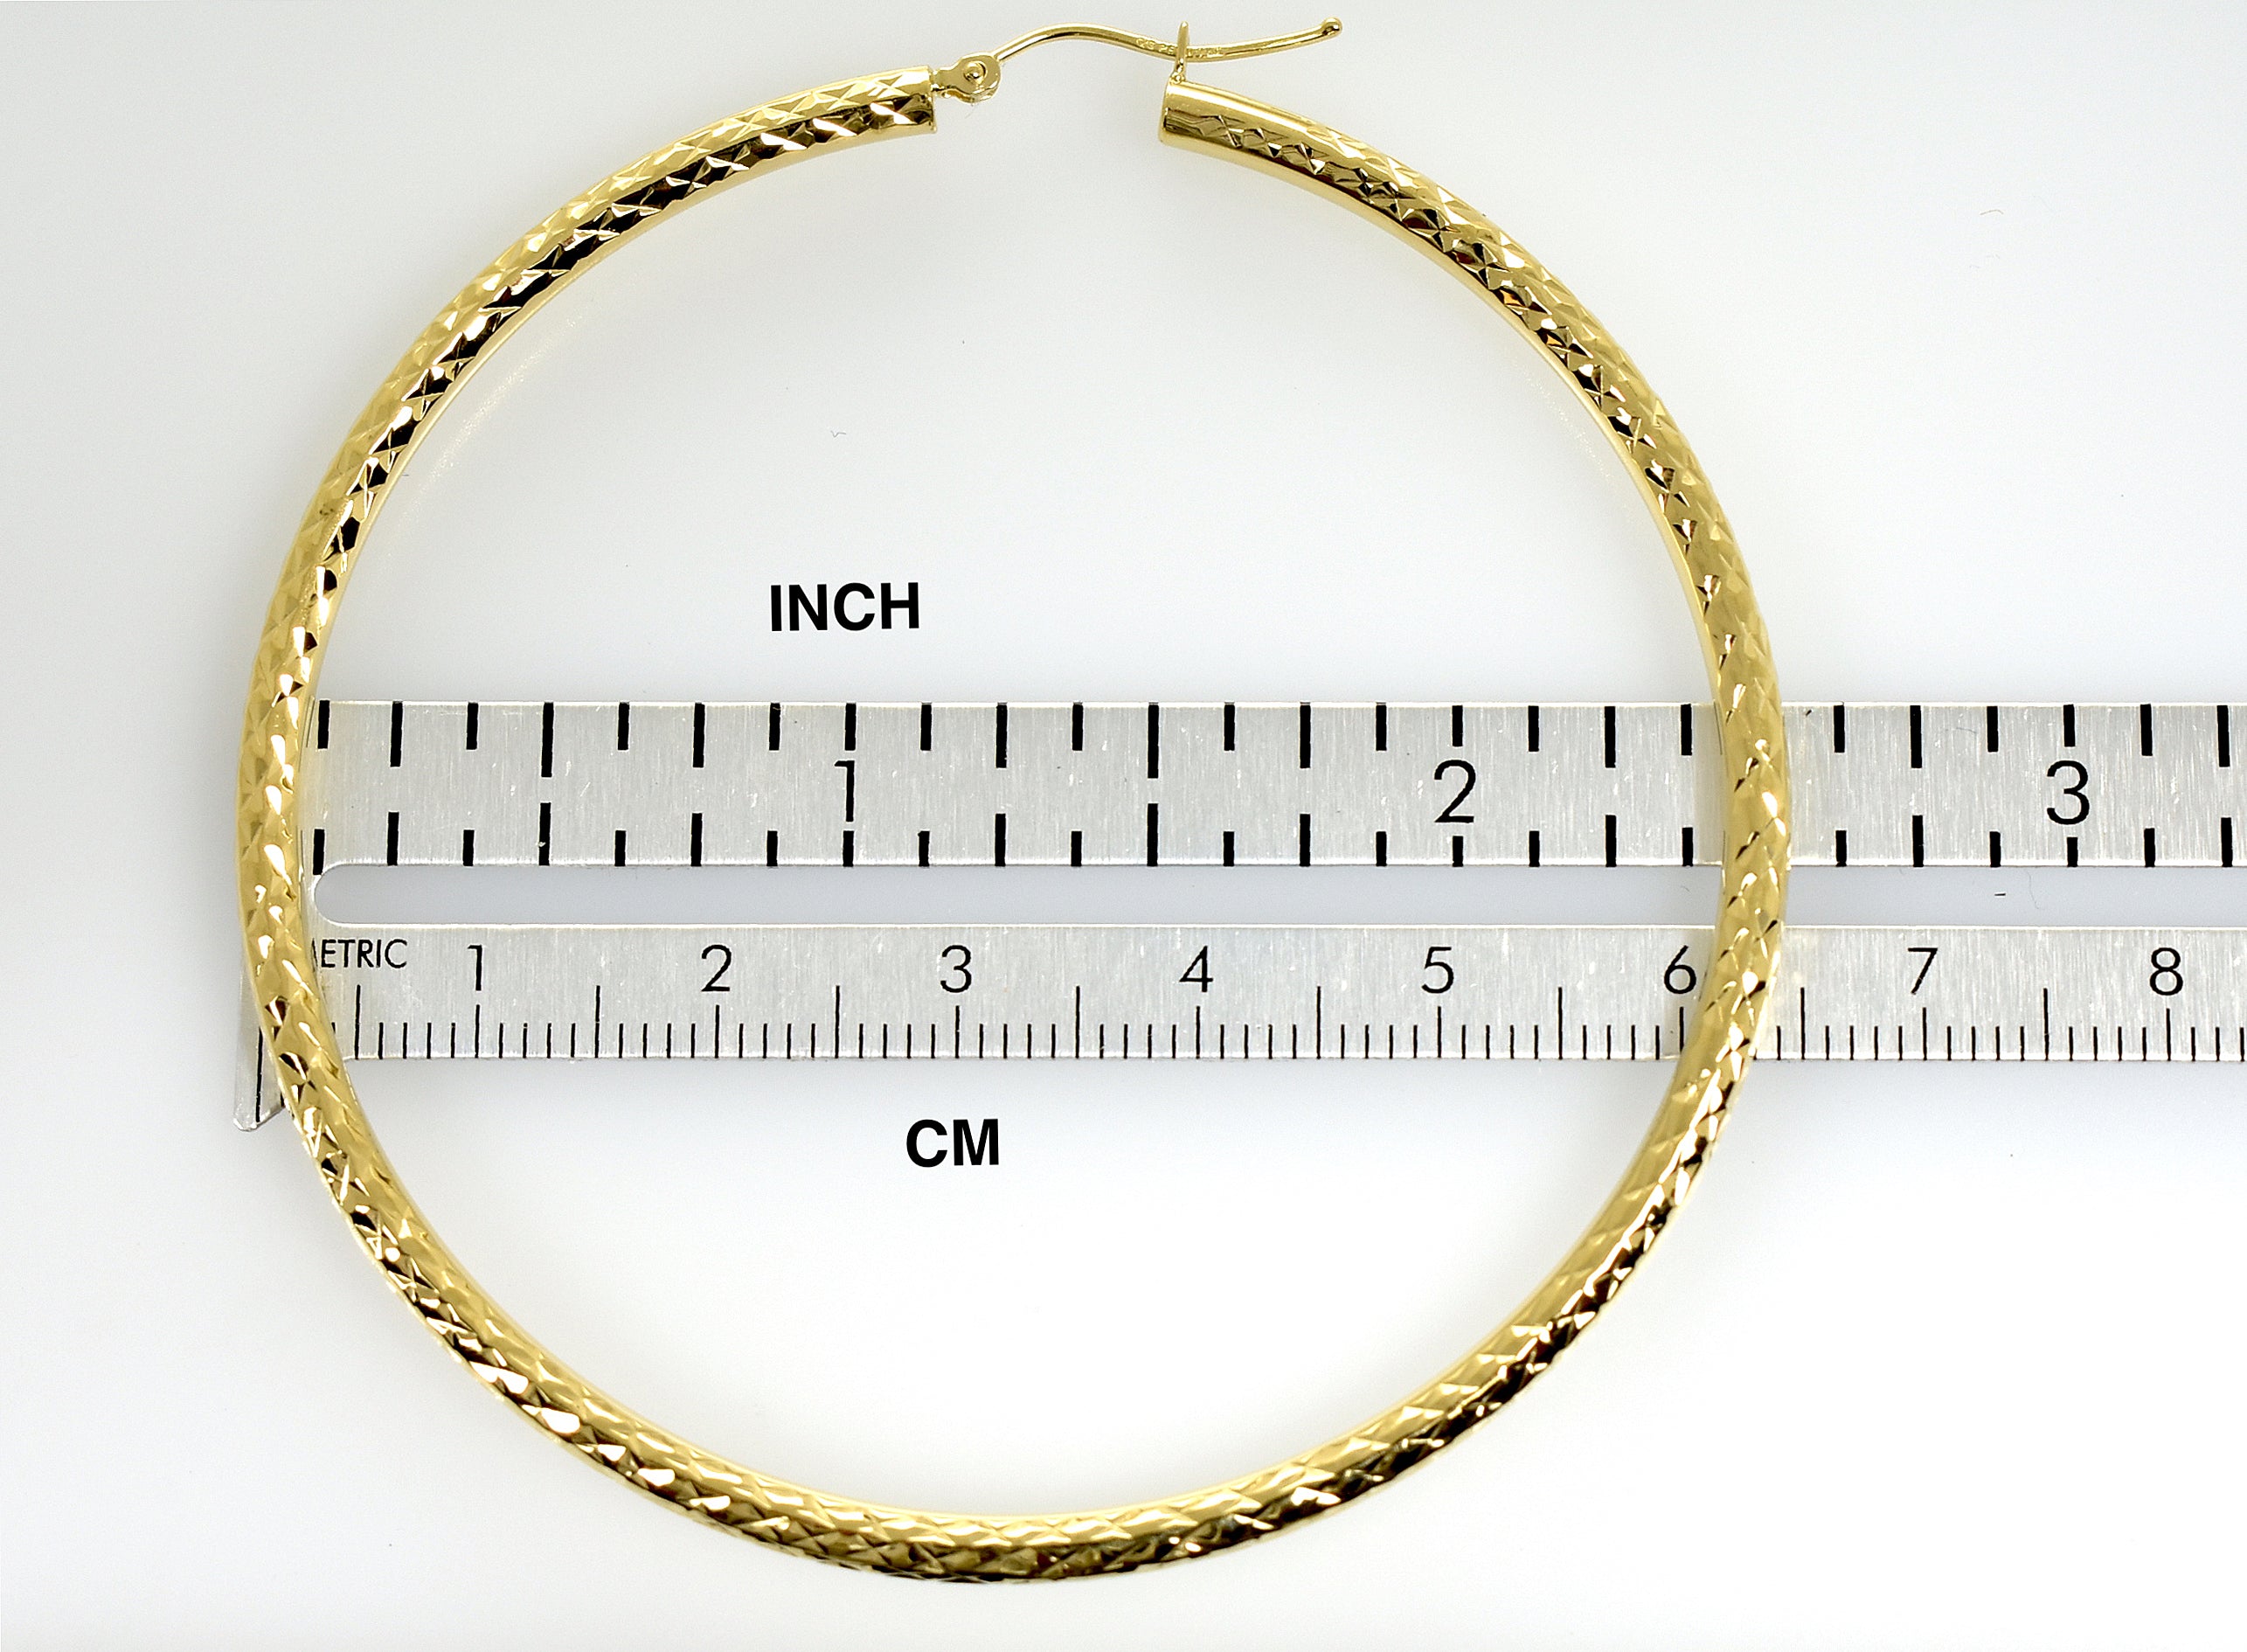 14K Yellow Gold Large Diamond Cut Classic Round Hoop Earrings 67mm x 3mm